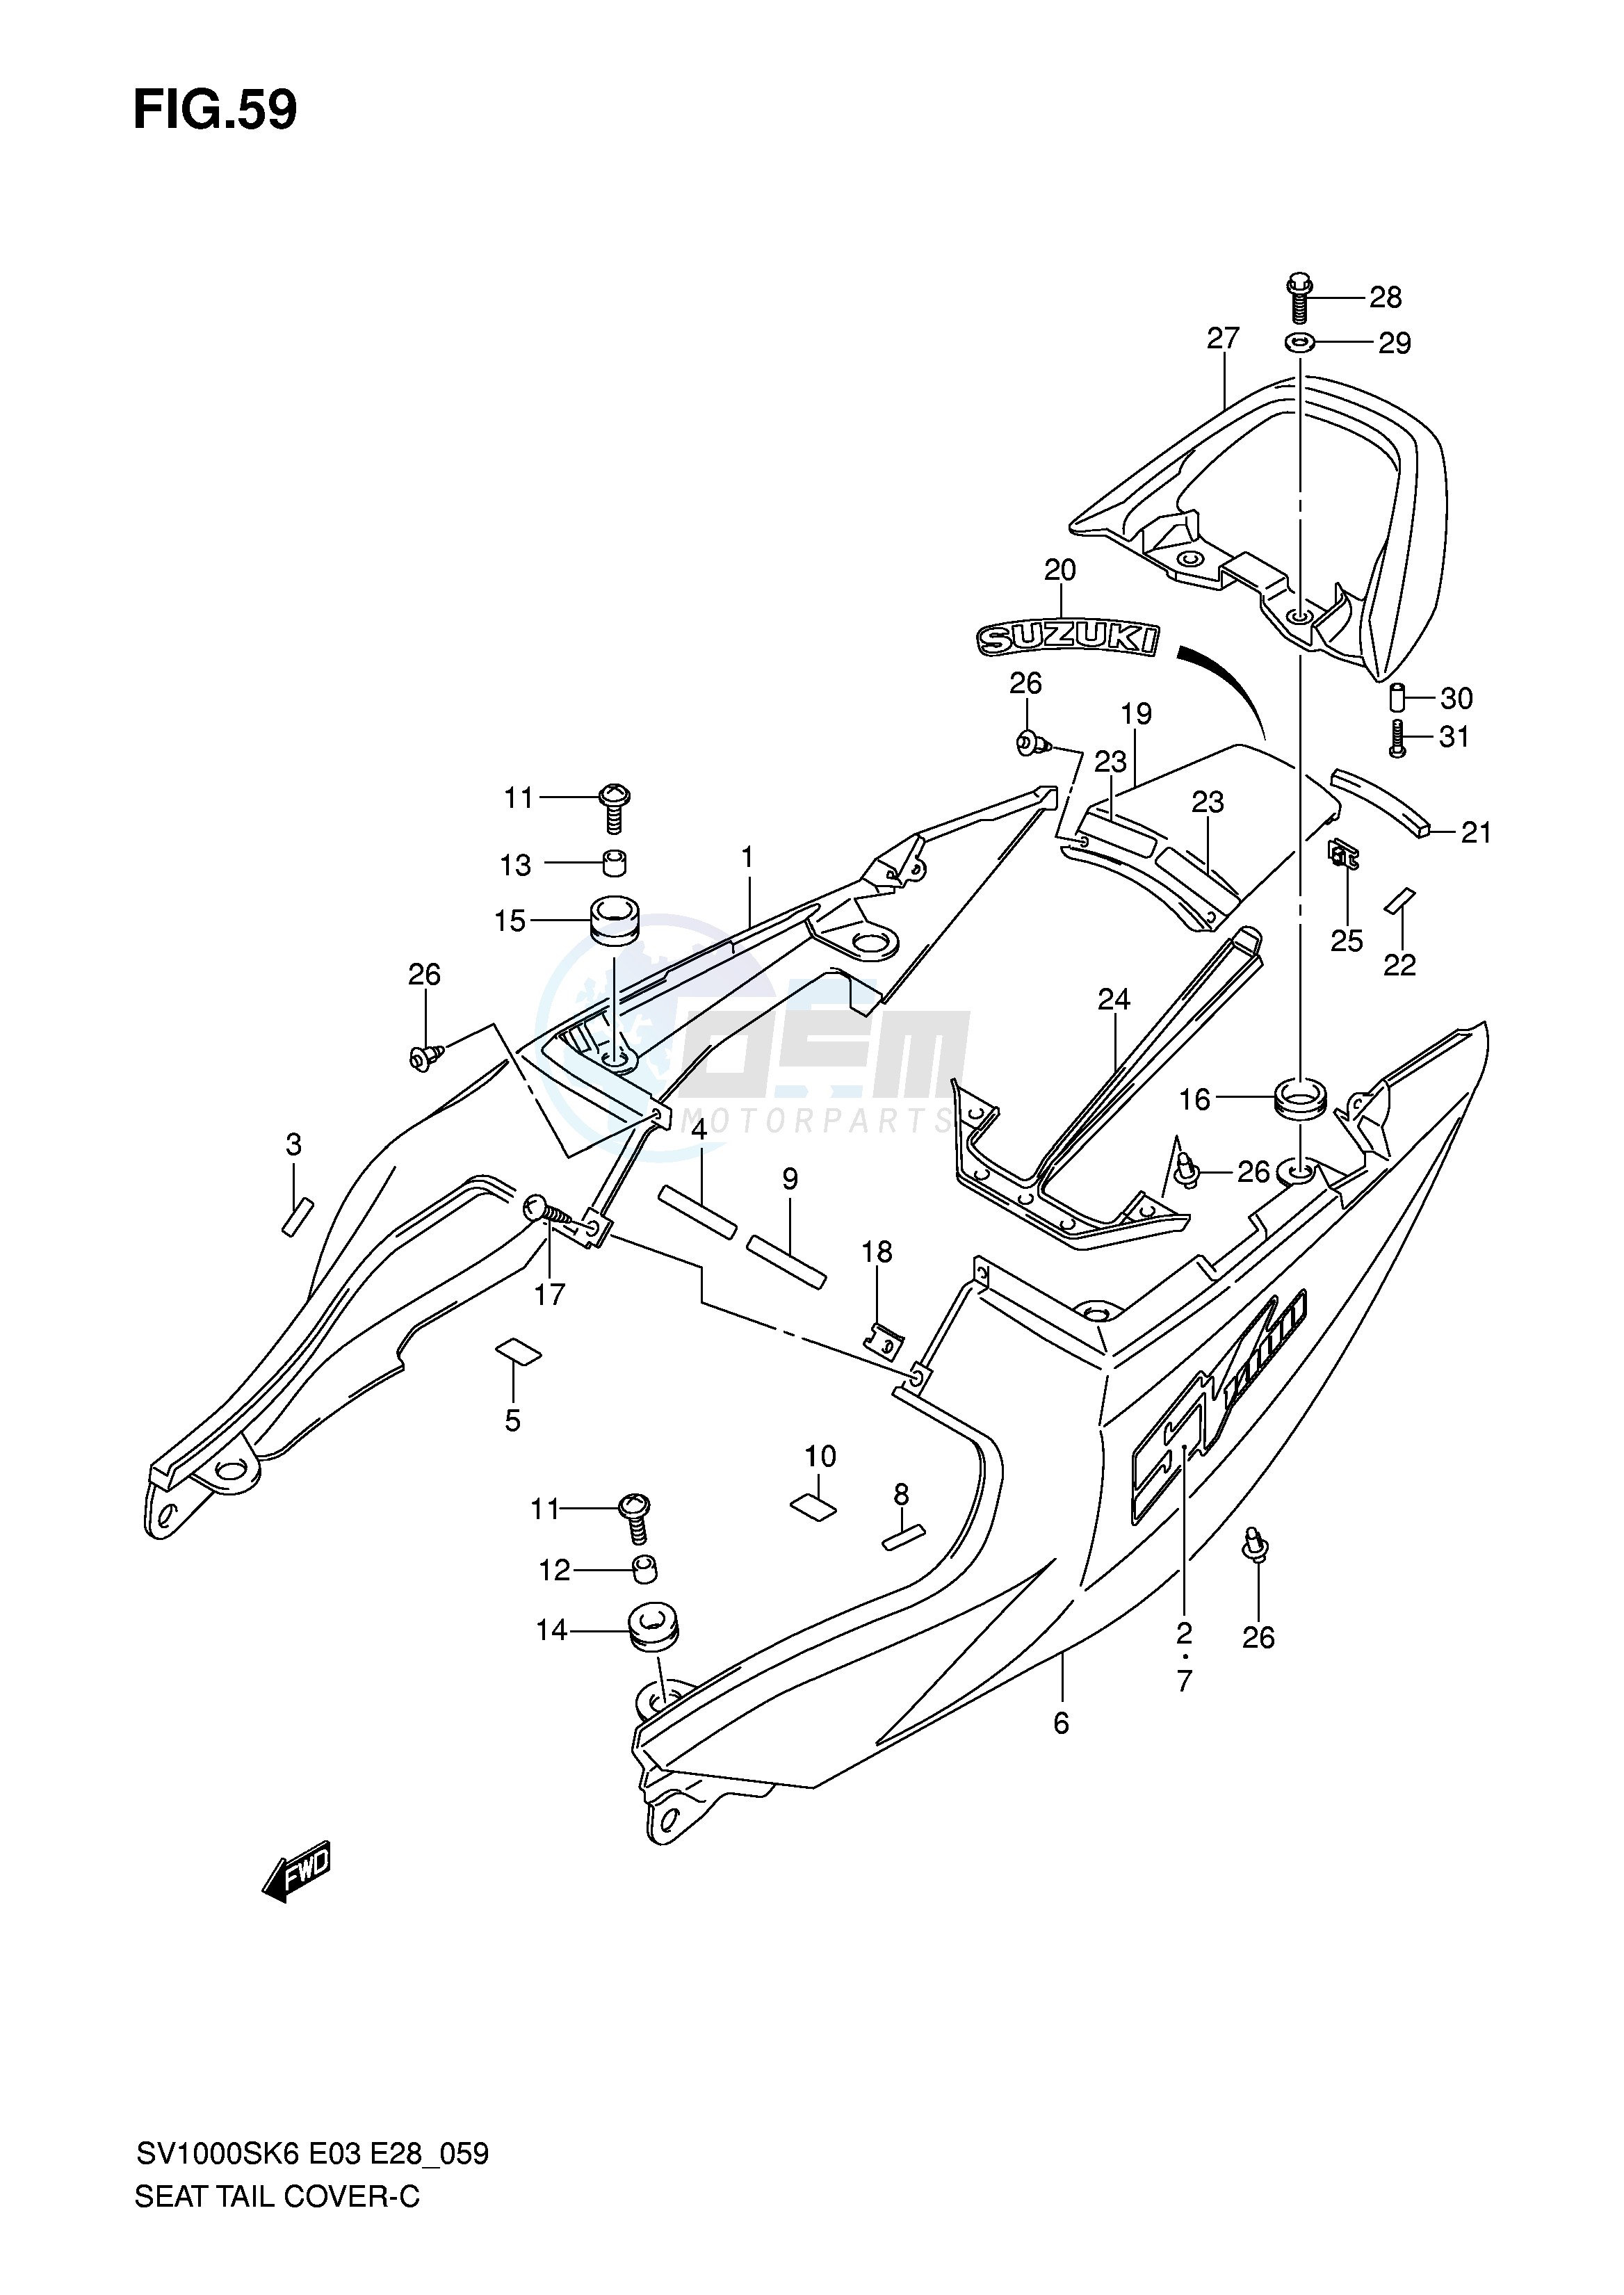 SEAT TAIL COVER (SV1000K6) blueprint